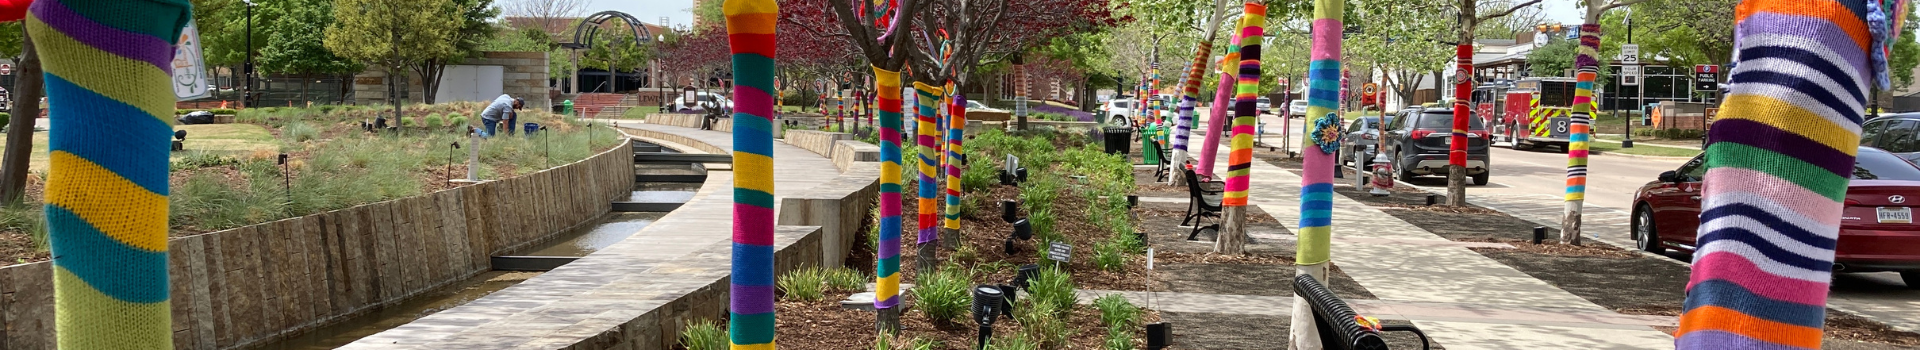 Wayne Ferguson Plaza trees covered in yarn sweaters